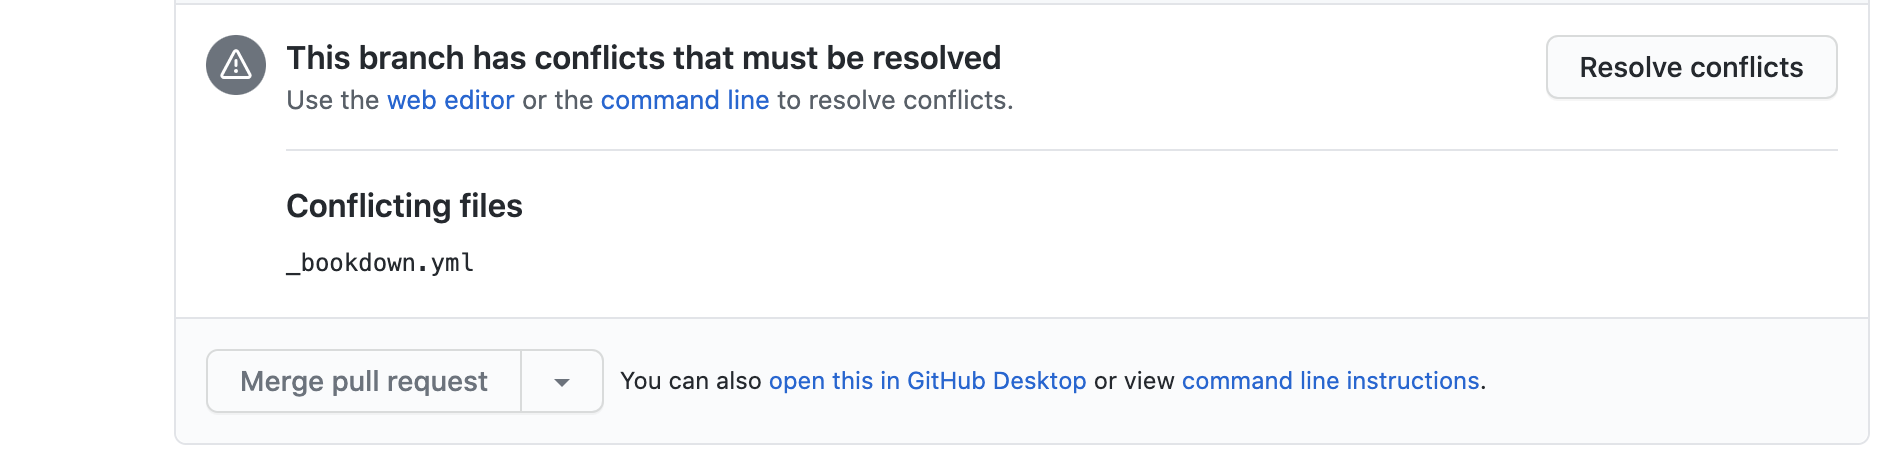 github desktop resolve conflicts